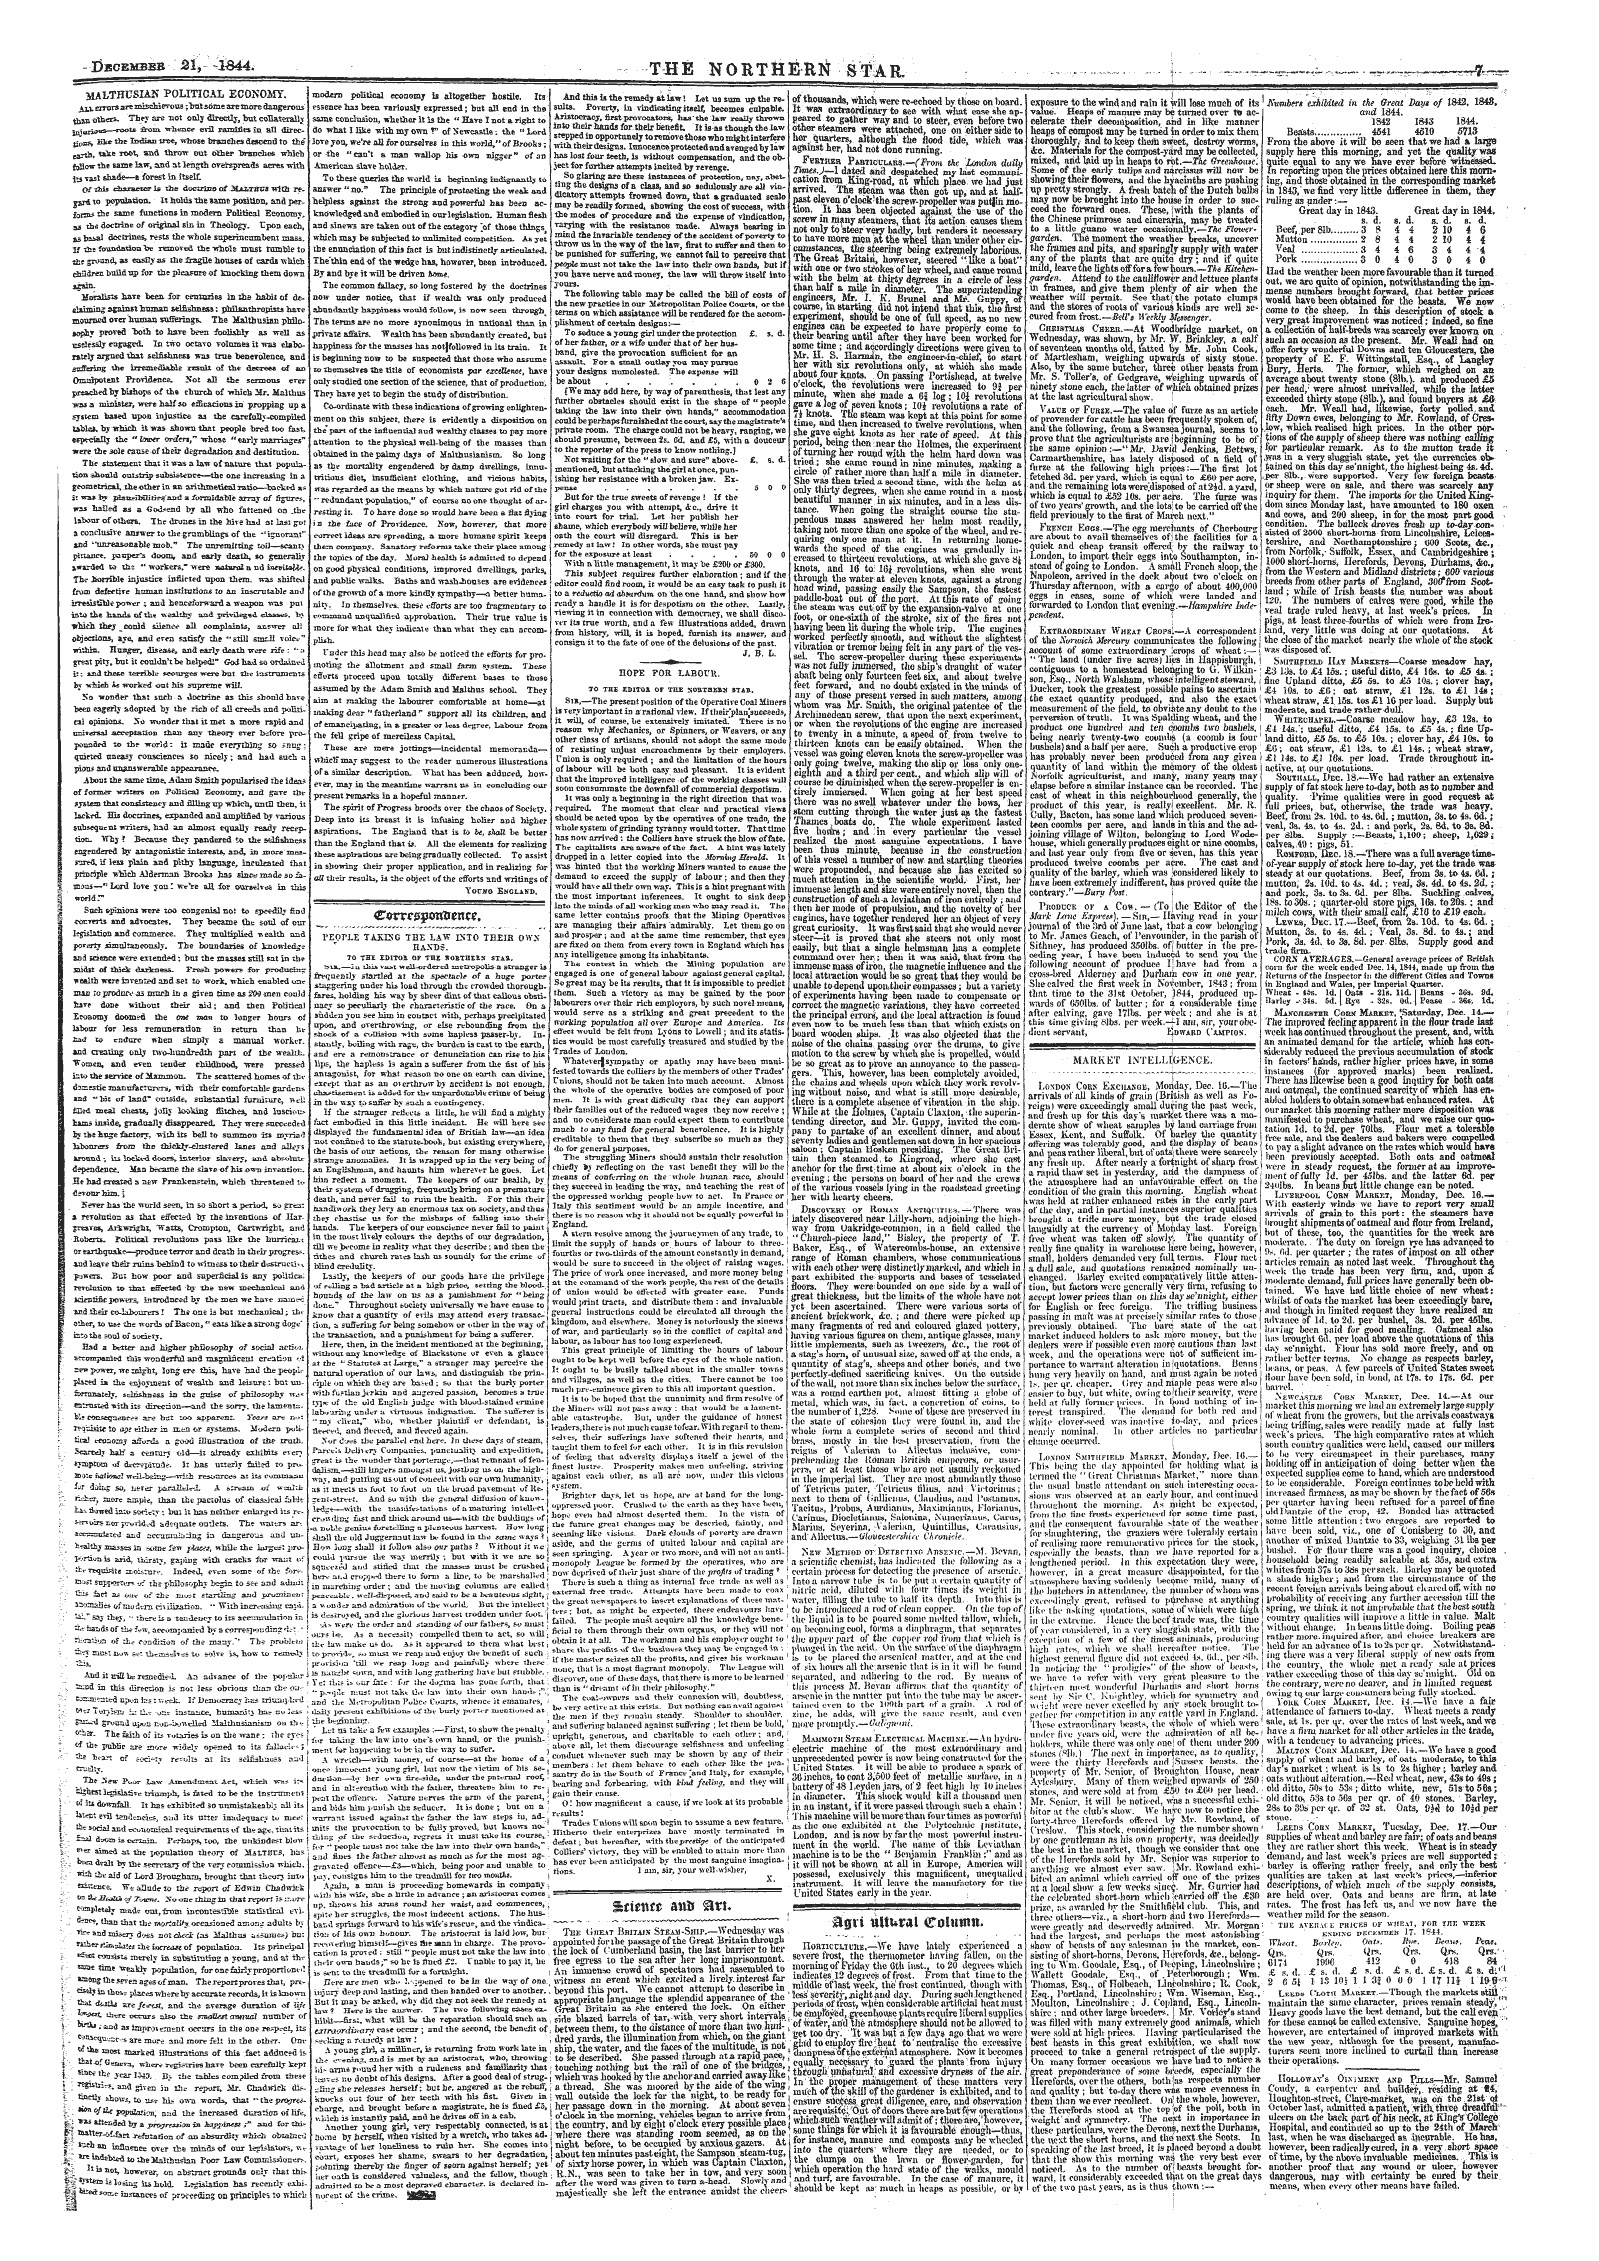 Northern Star (1837-1852): jS F Y, 2nd edition - Corrcsbonlrentt